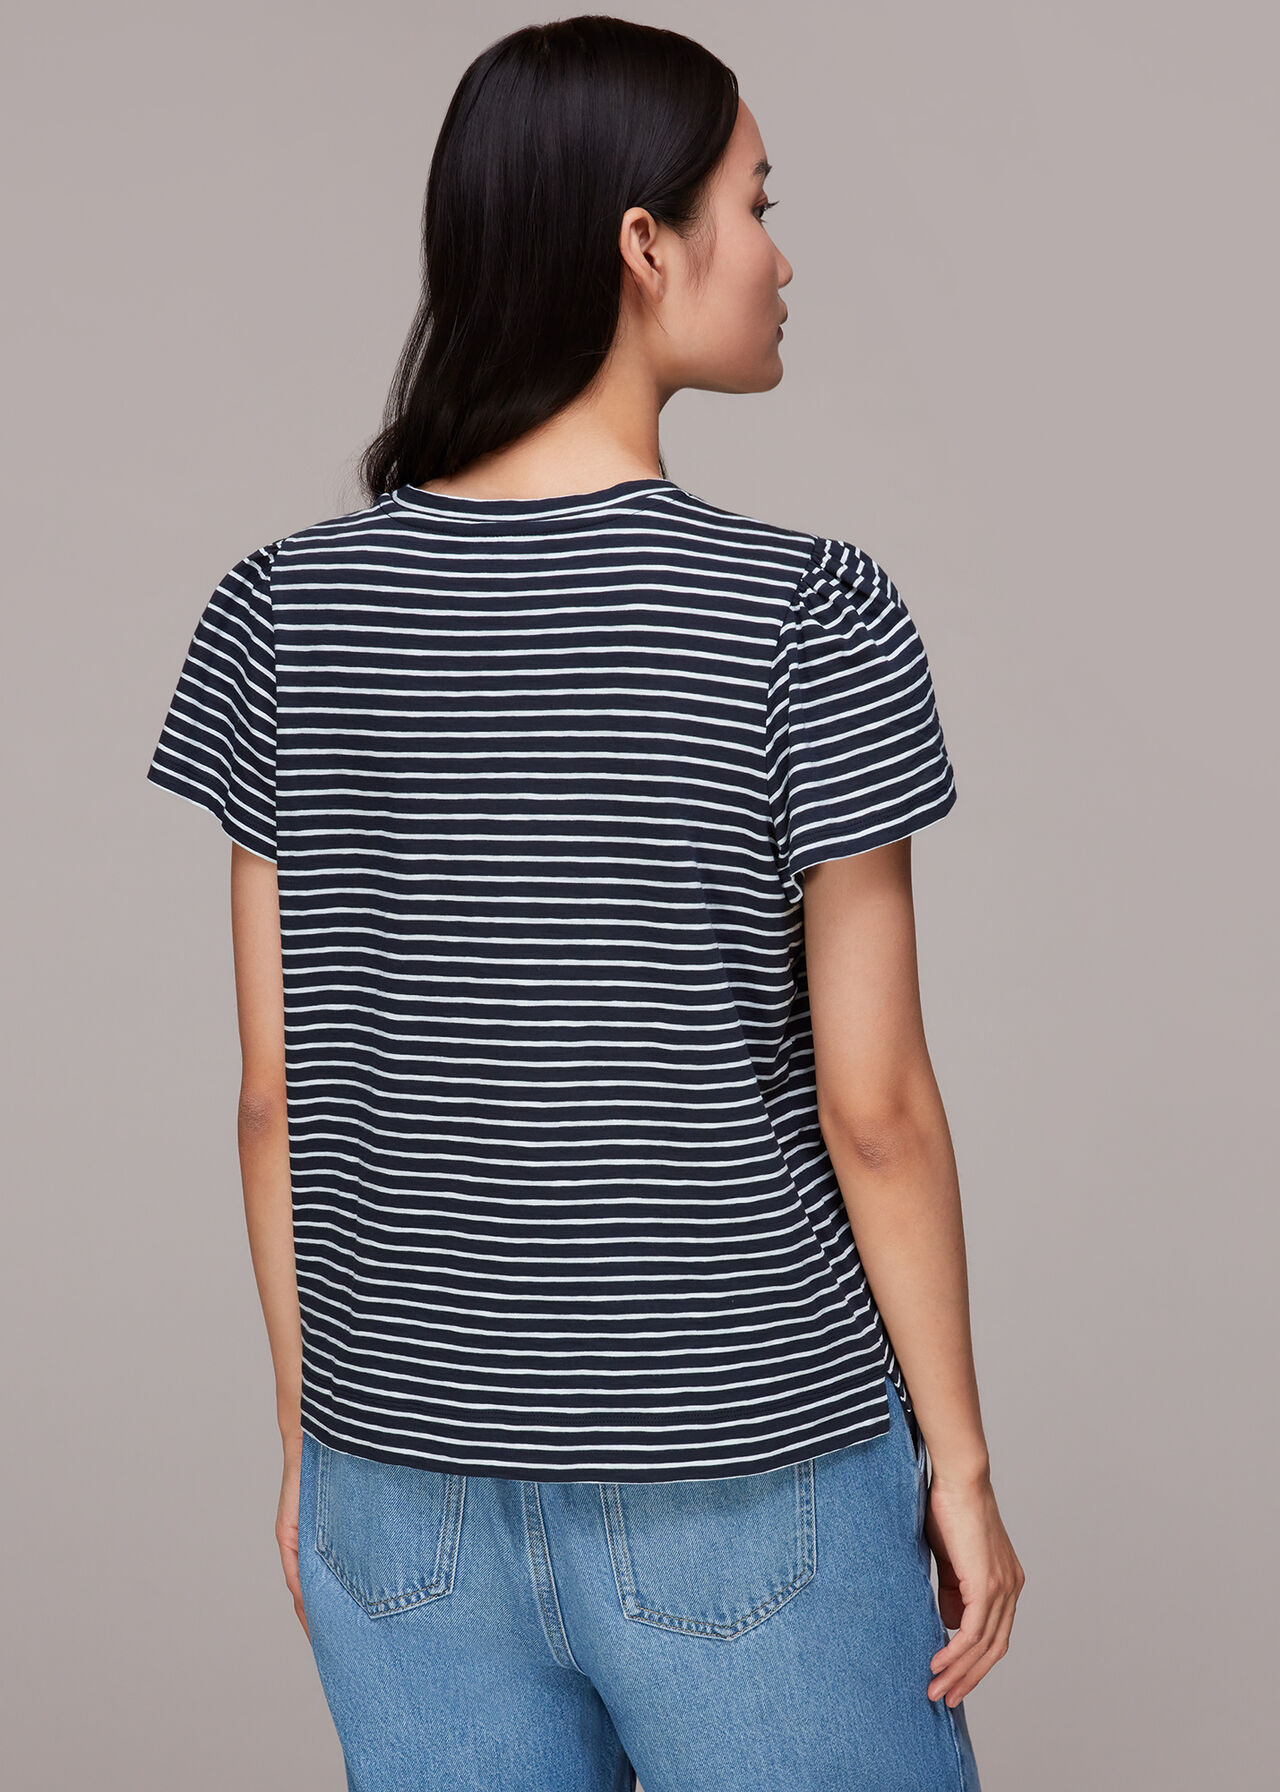 Cotton Frill Stripe T Shirt